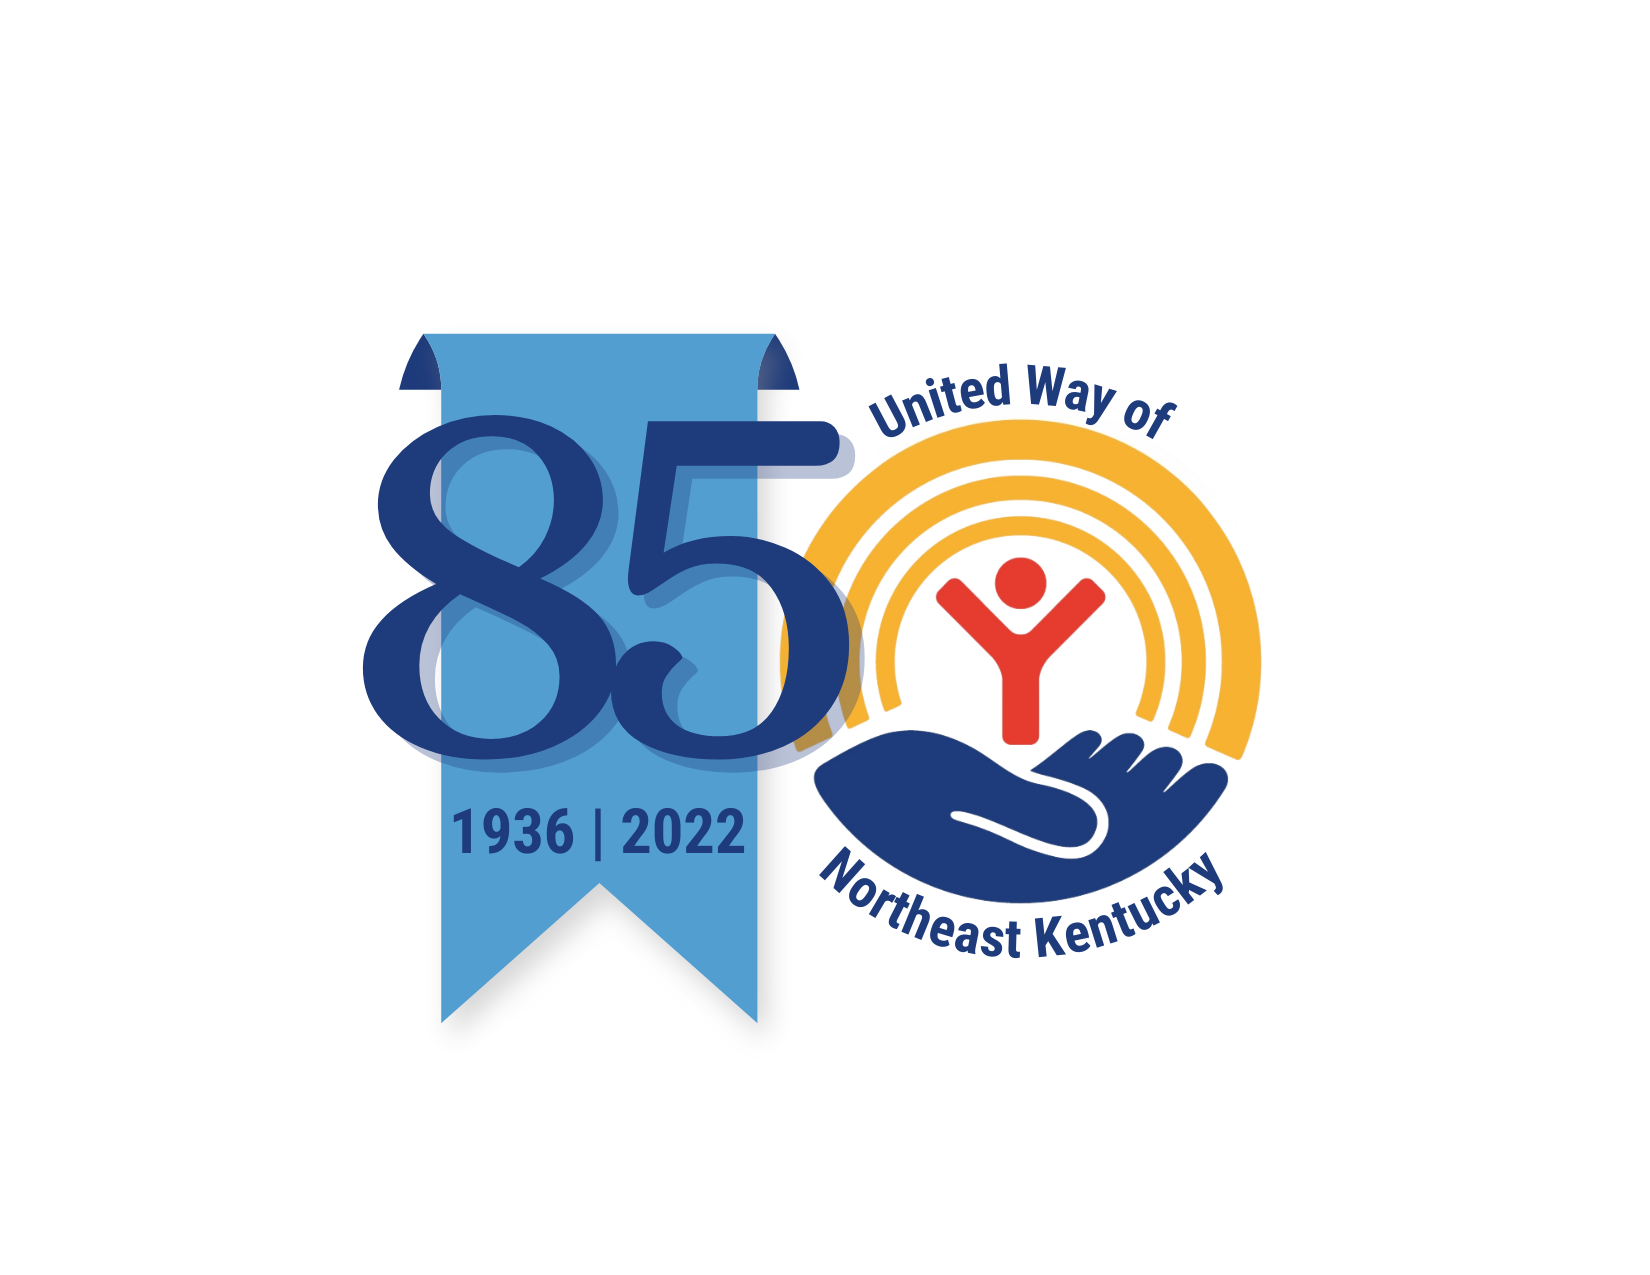 UWNEK 85 Year Anniversary logo